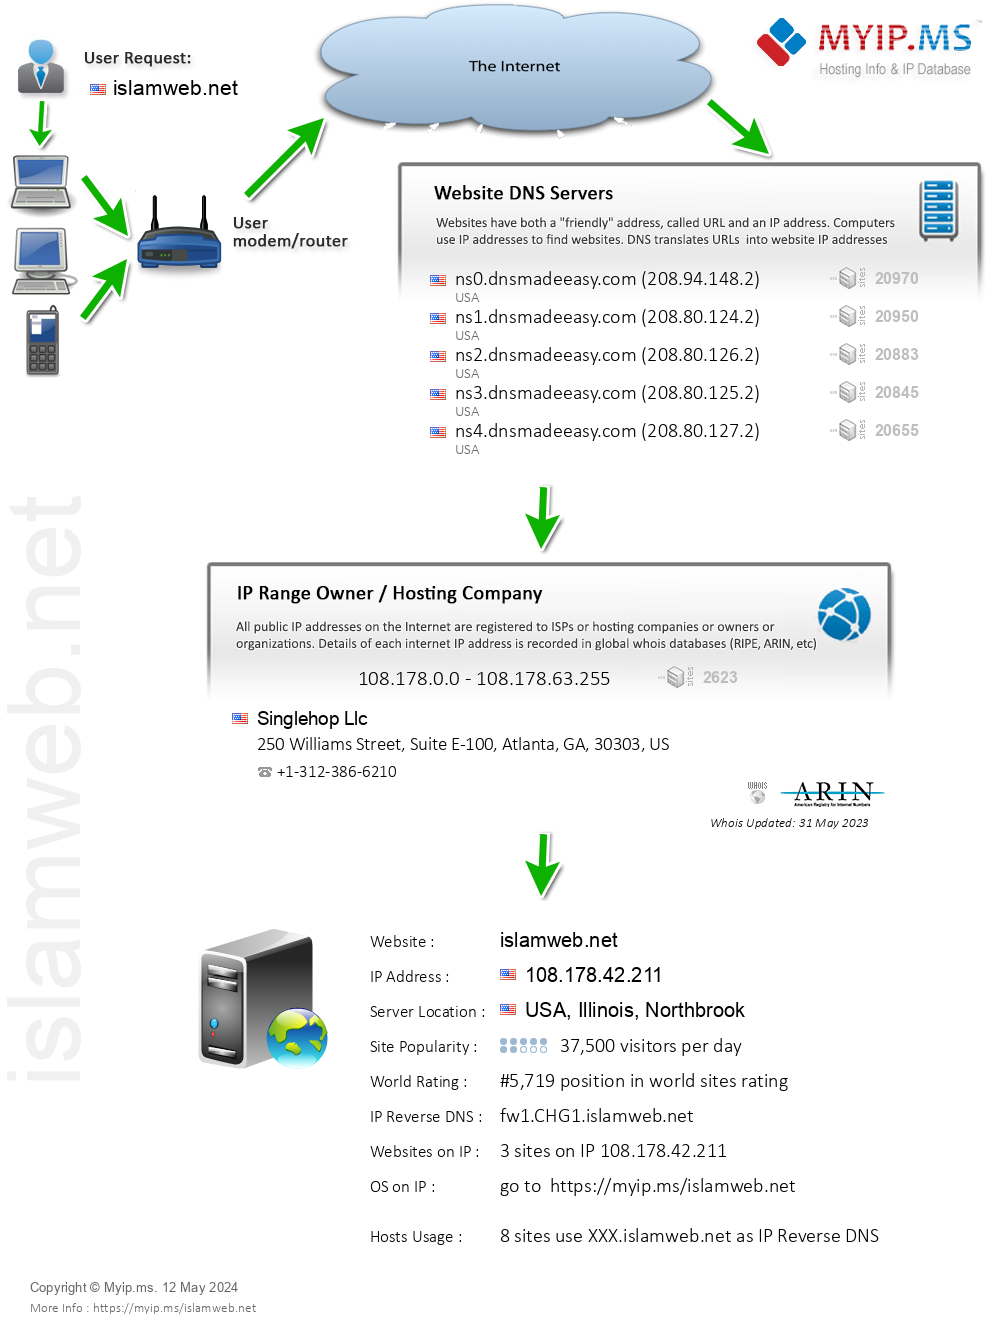 Islamweb.net - Website Hosting Visual IP Diagram